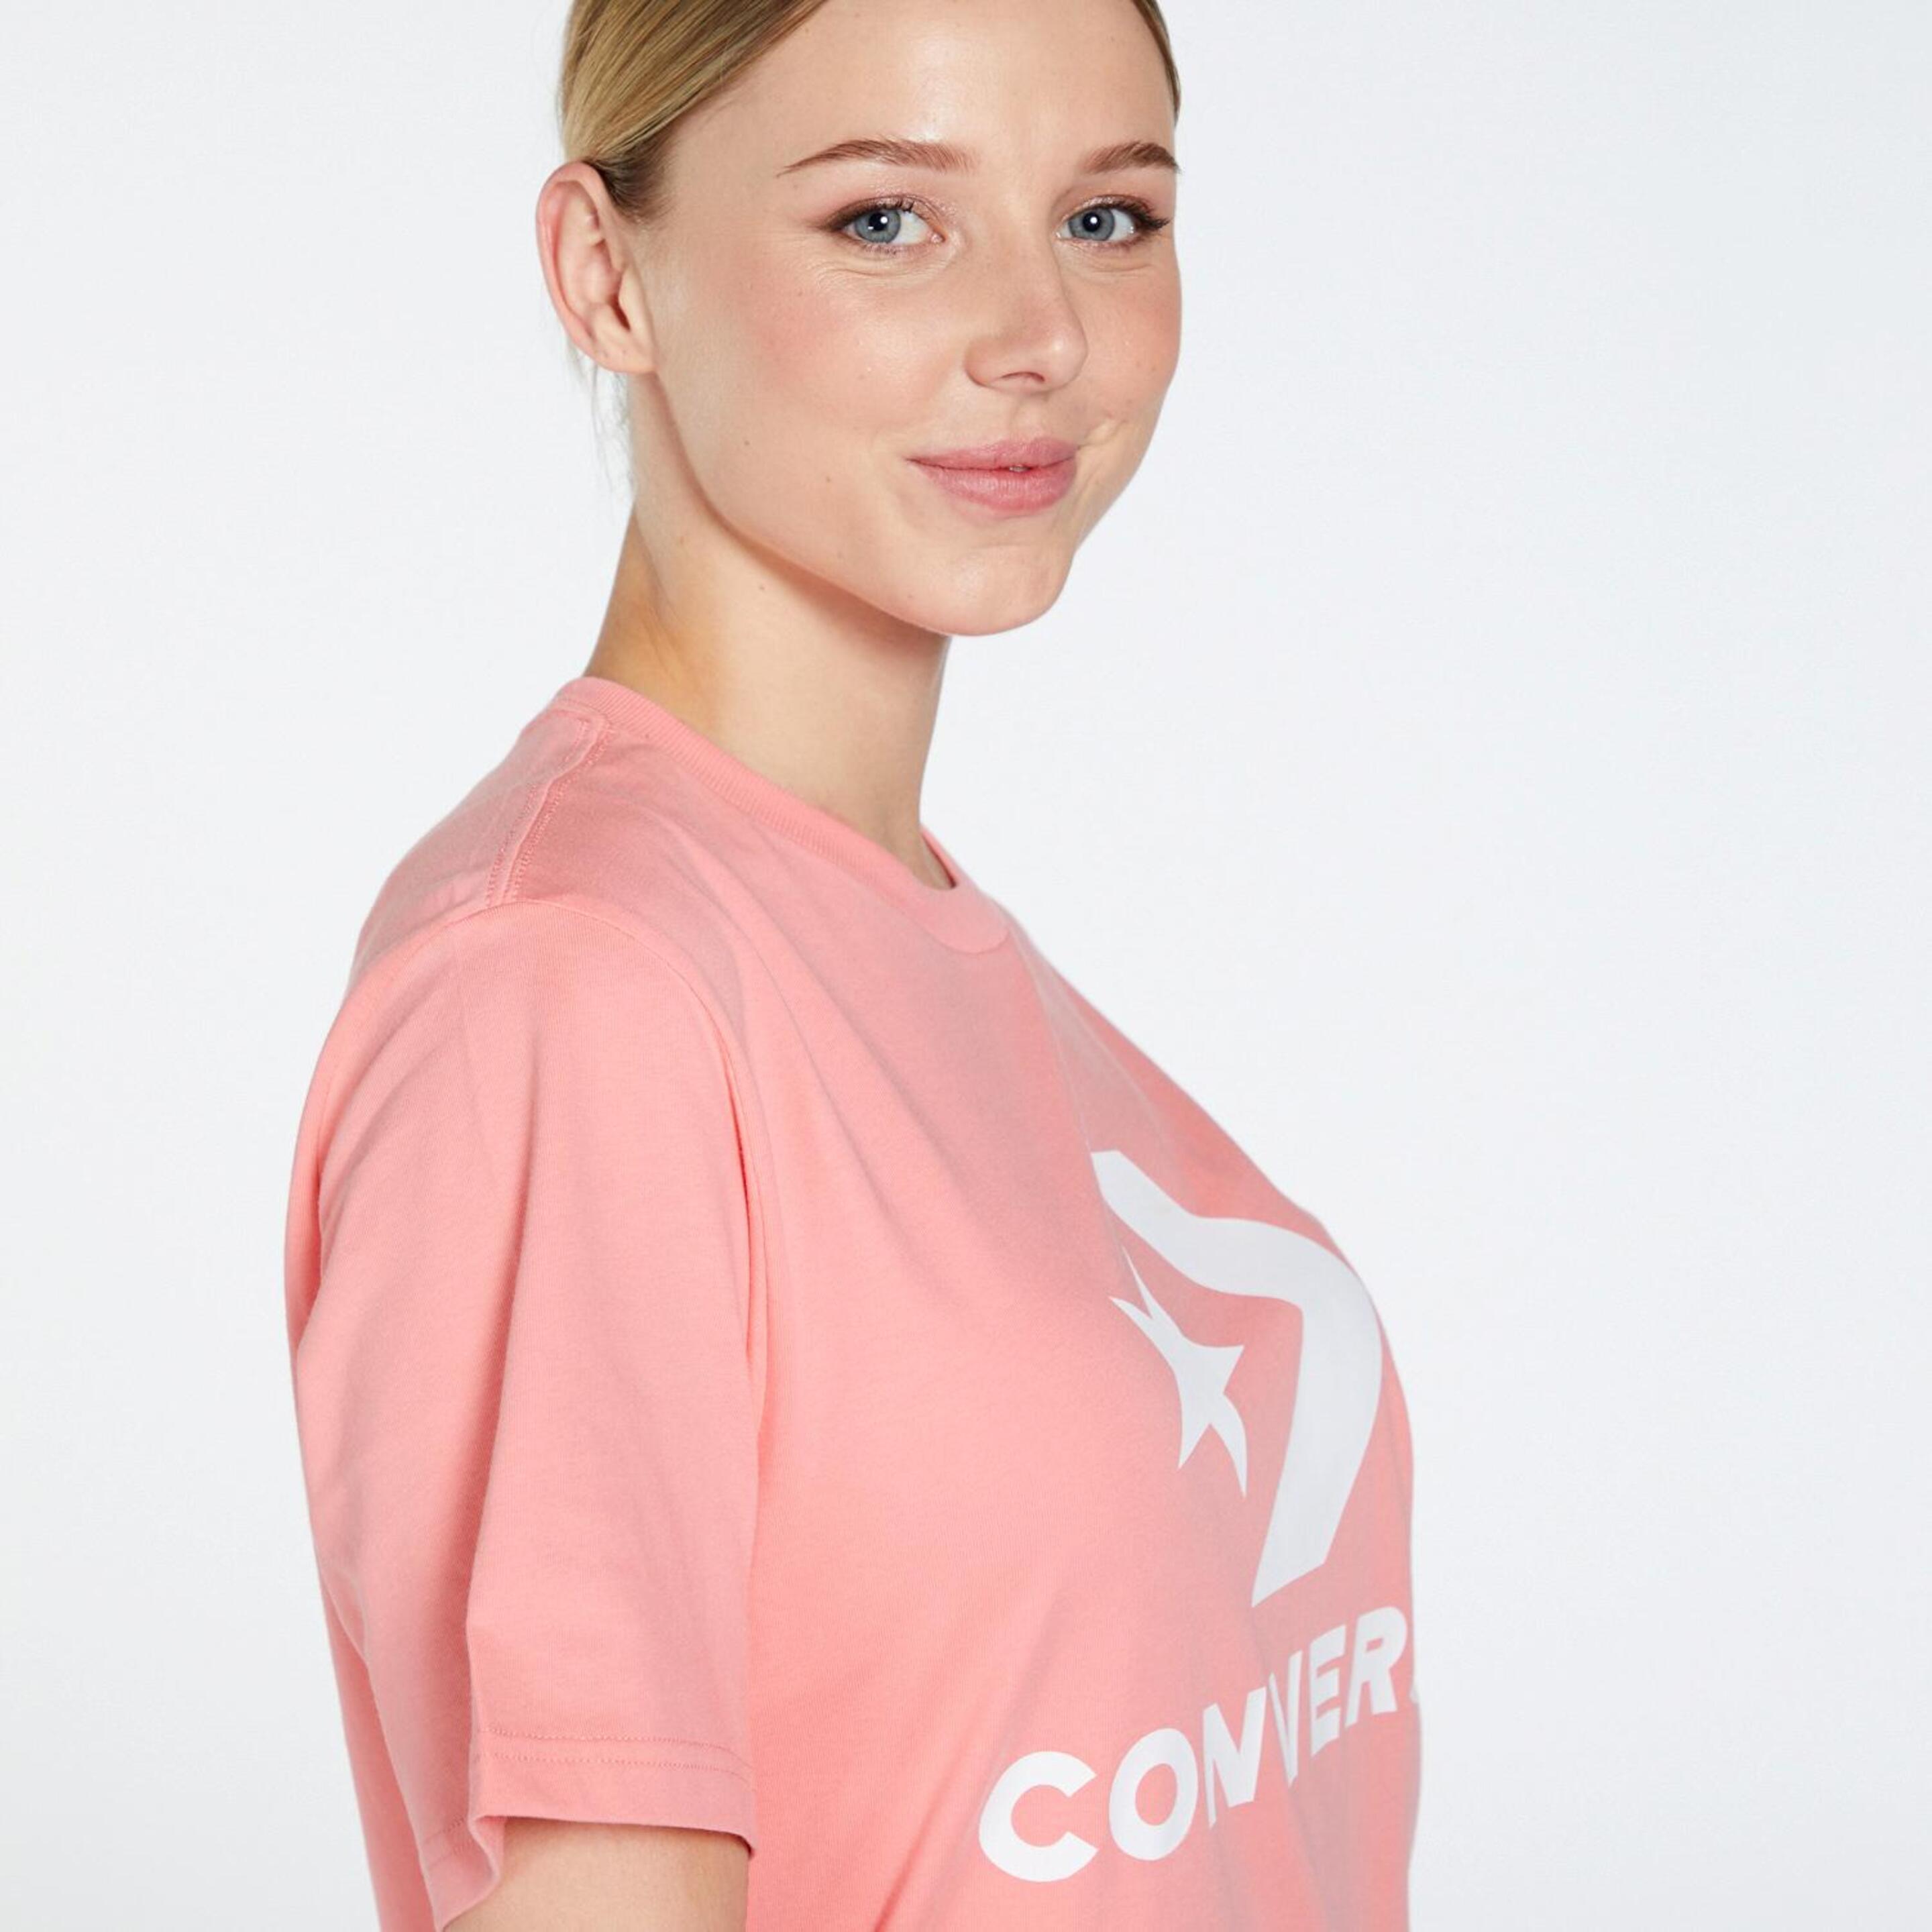 Converse Star Chevron - Coral - Camiseta Mujer